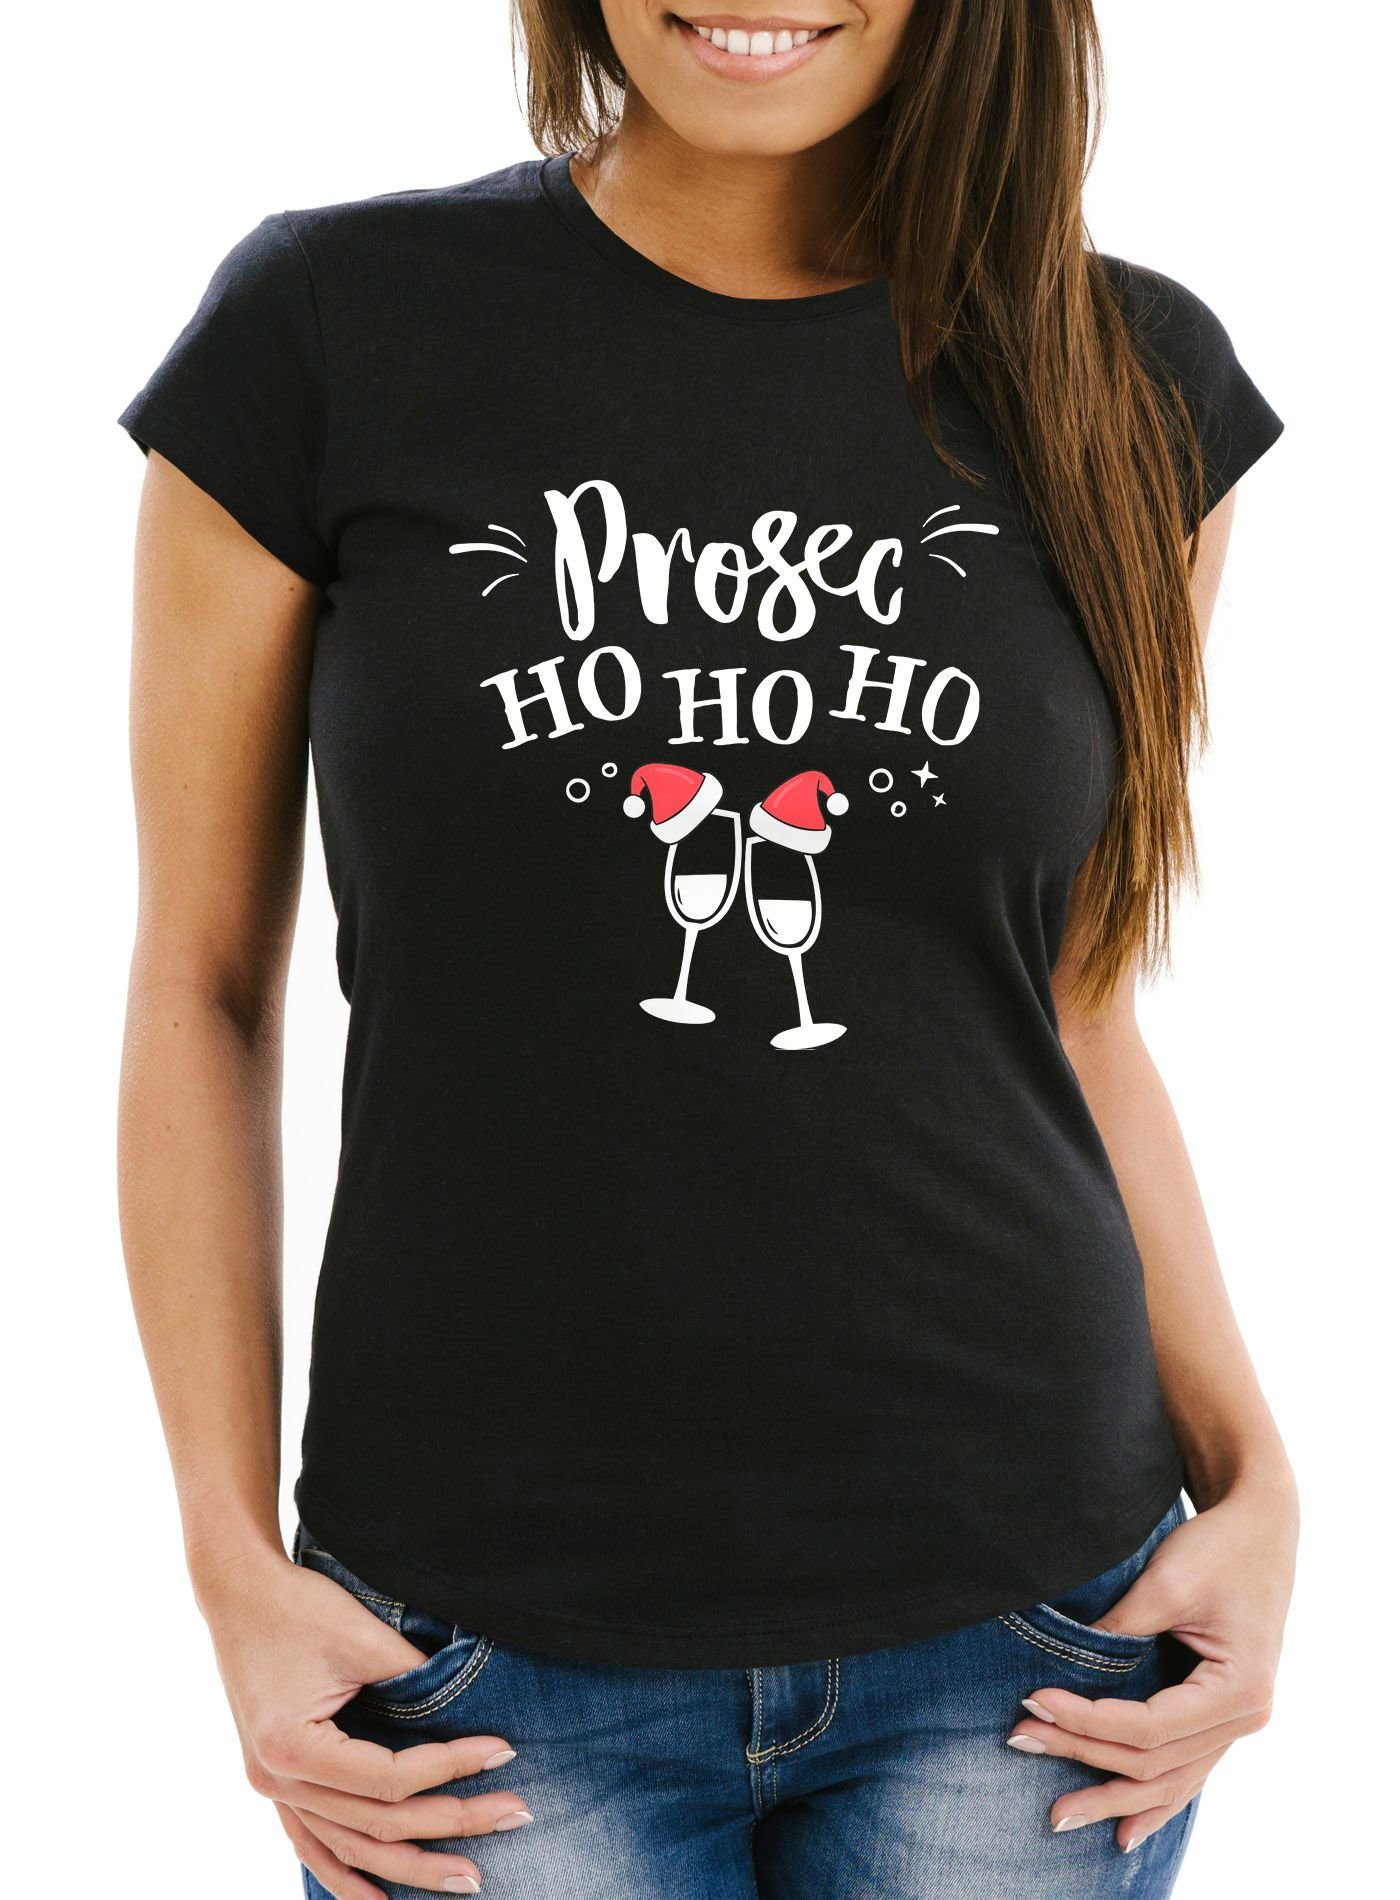 mit Print Weihnachten HoHoHo Prosecco MoonWorks Fun-Shirt Print-Shirt Weih Frauen Damen T-Shirt Lustig